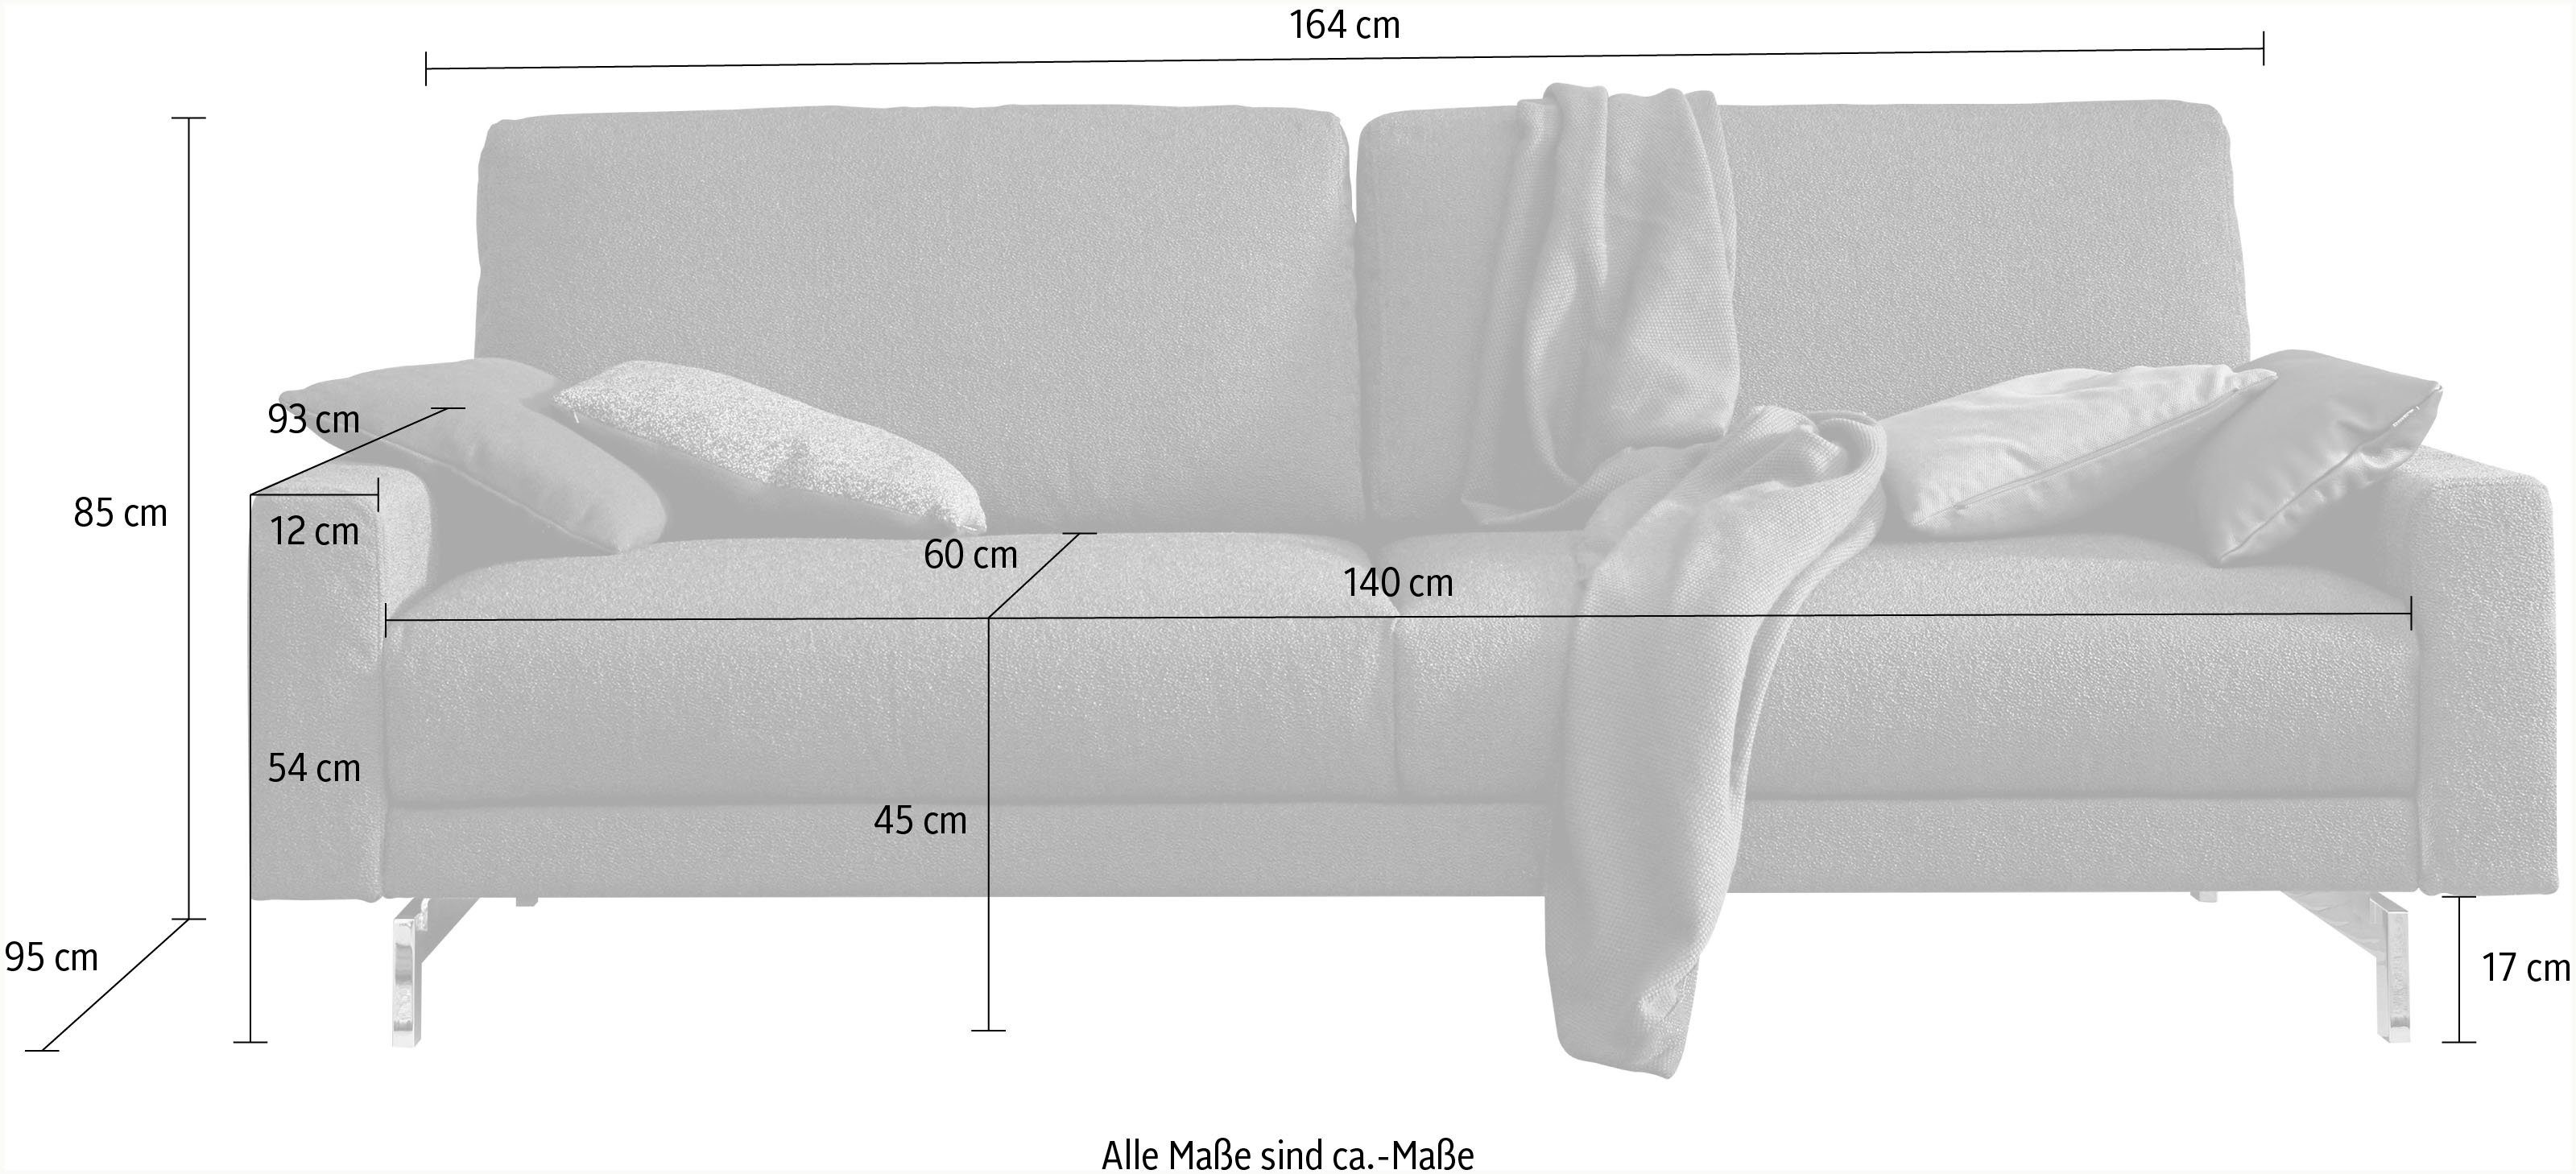 2-Sitzer sofa hs.450, 164 Breite chromfarben glänzend, Fuß Armlehne hülsta niedrig, cm